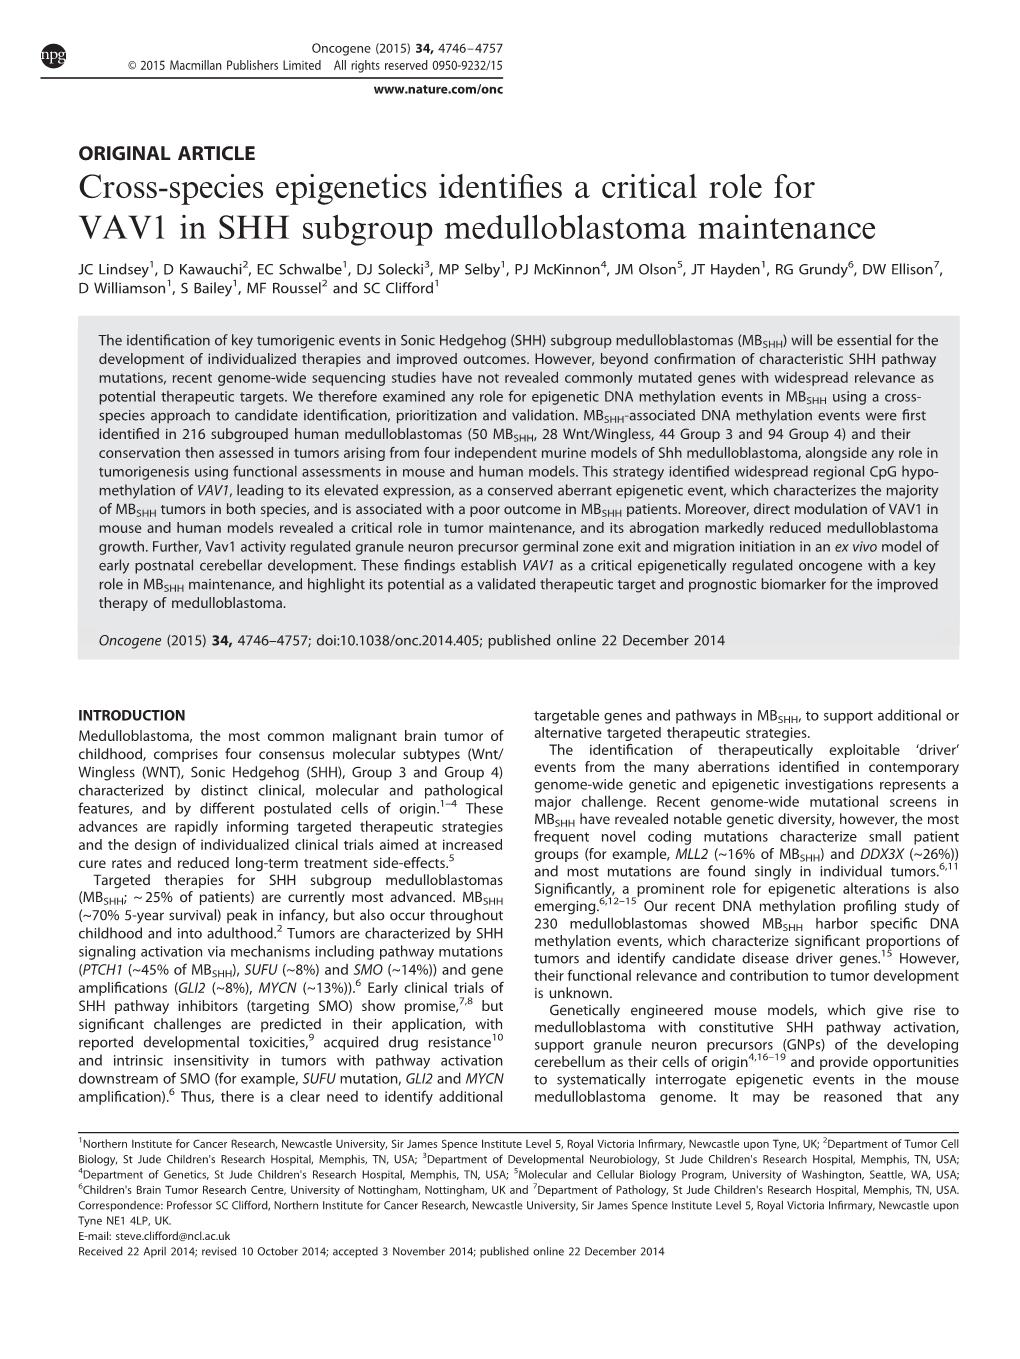 Cross-Species Epigenetics Identifies a Critical Role for VAV1 in SHH